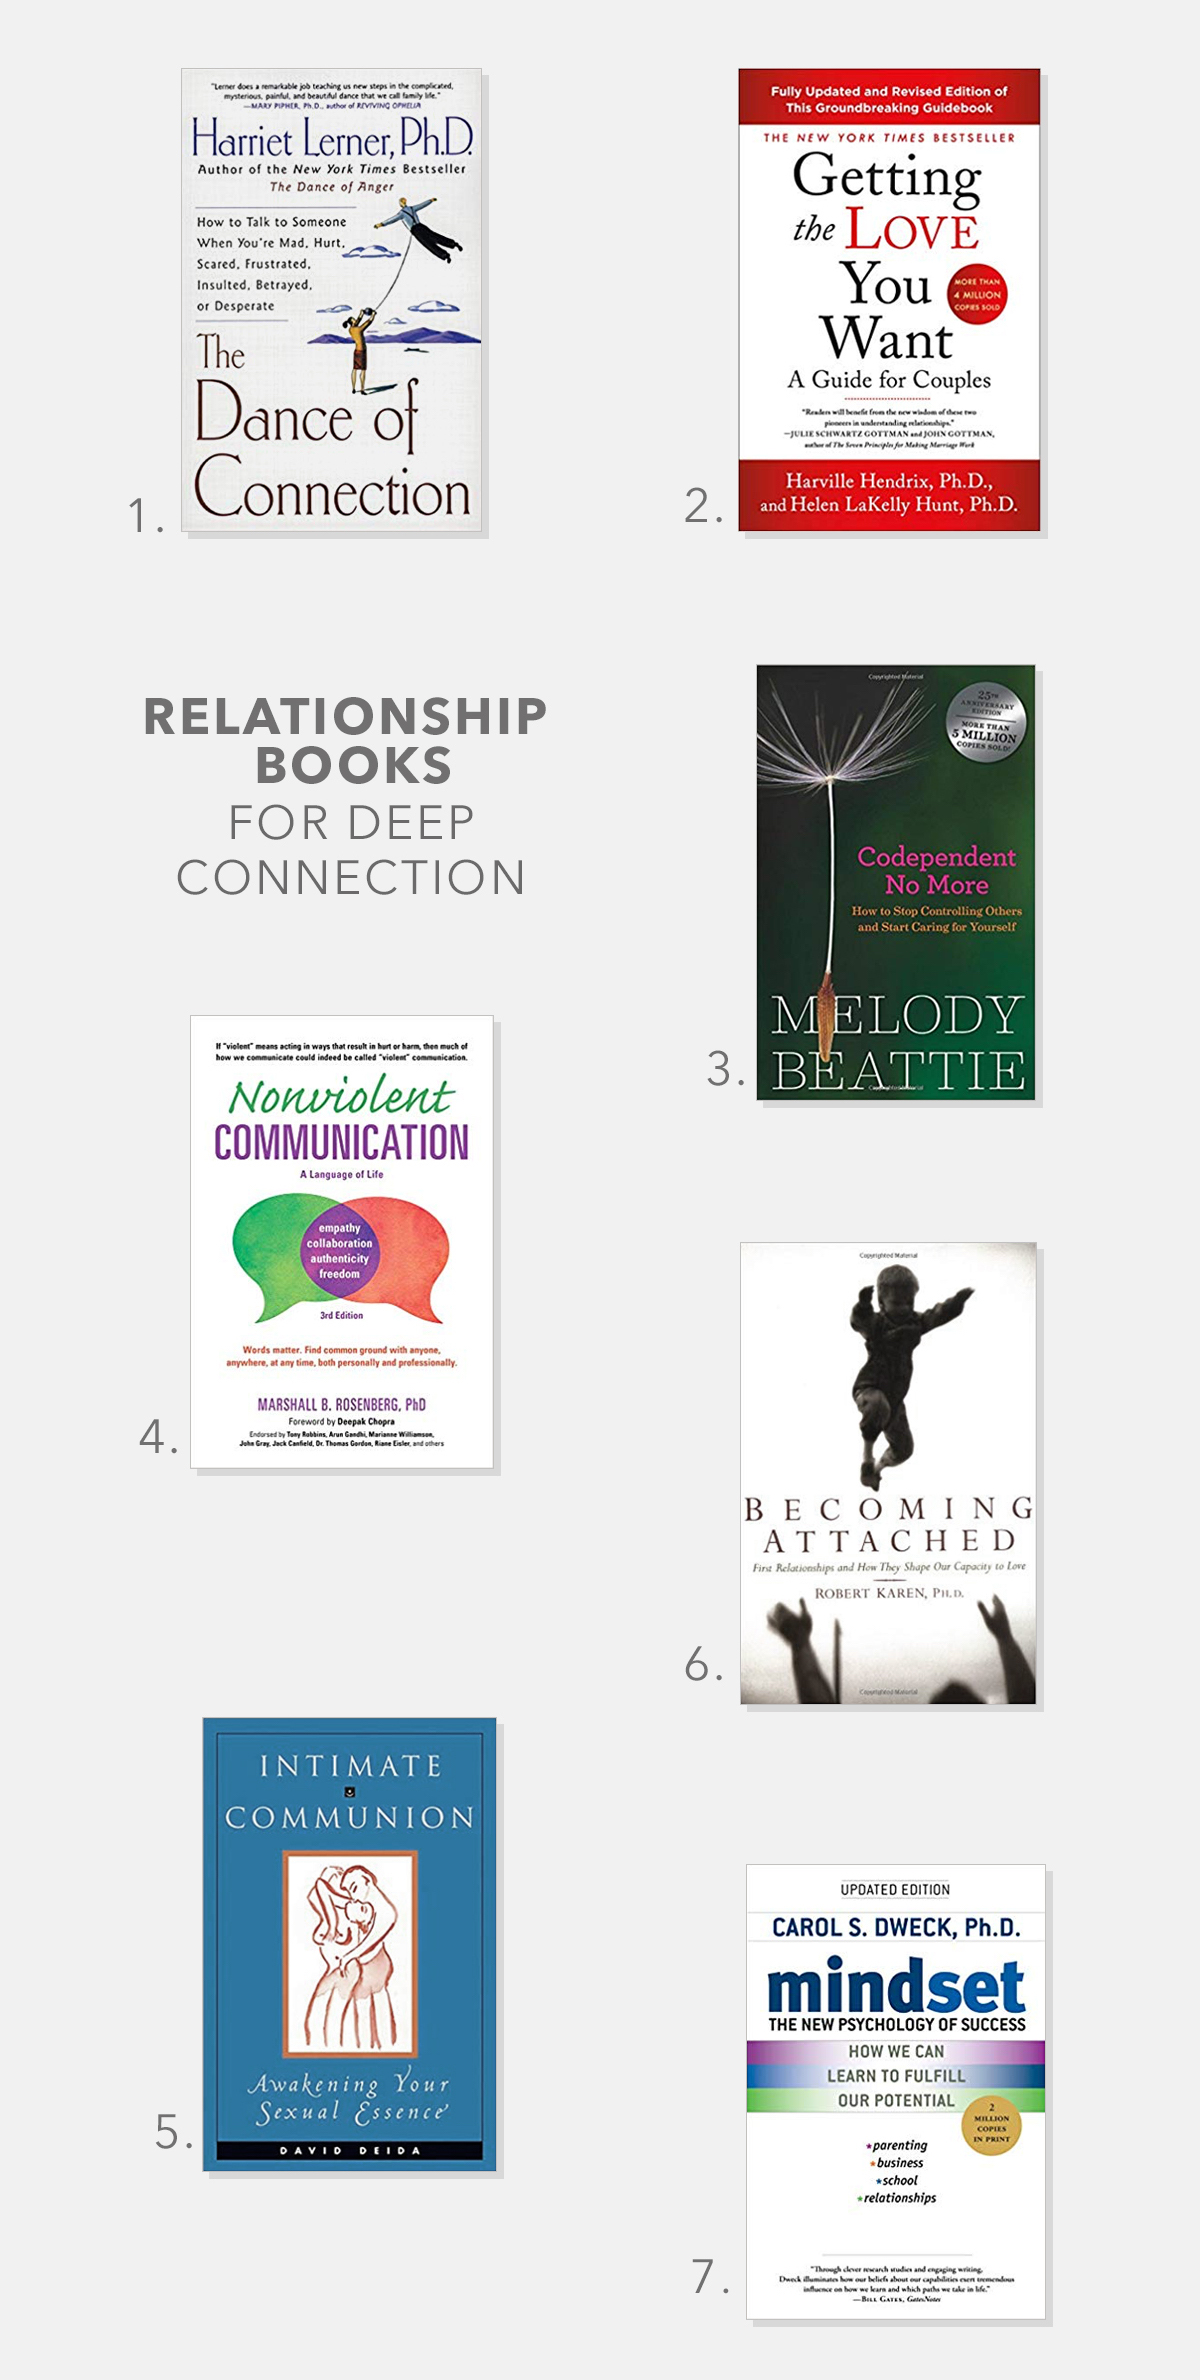 relationship books